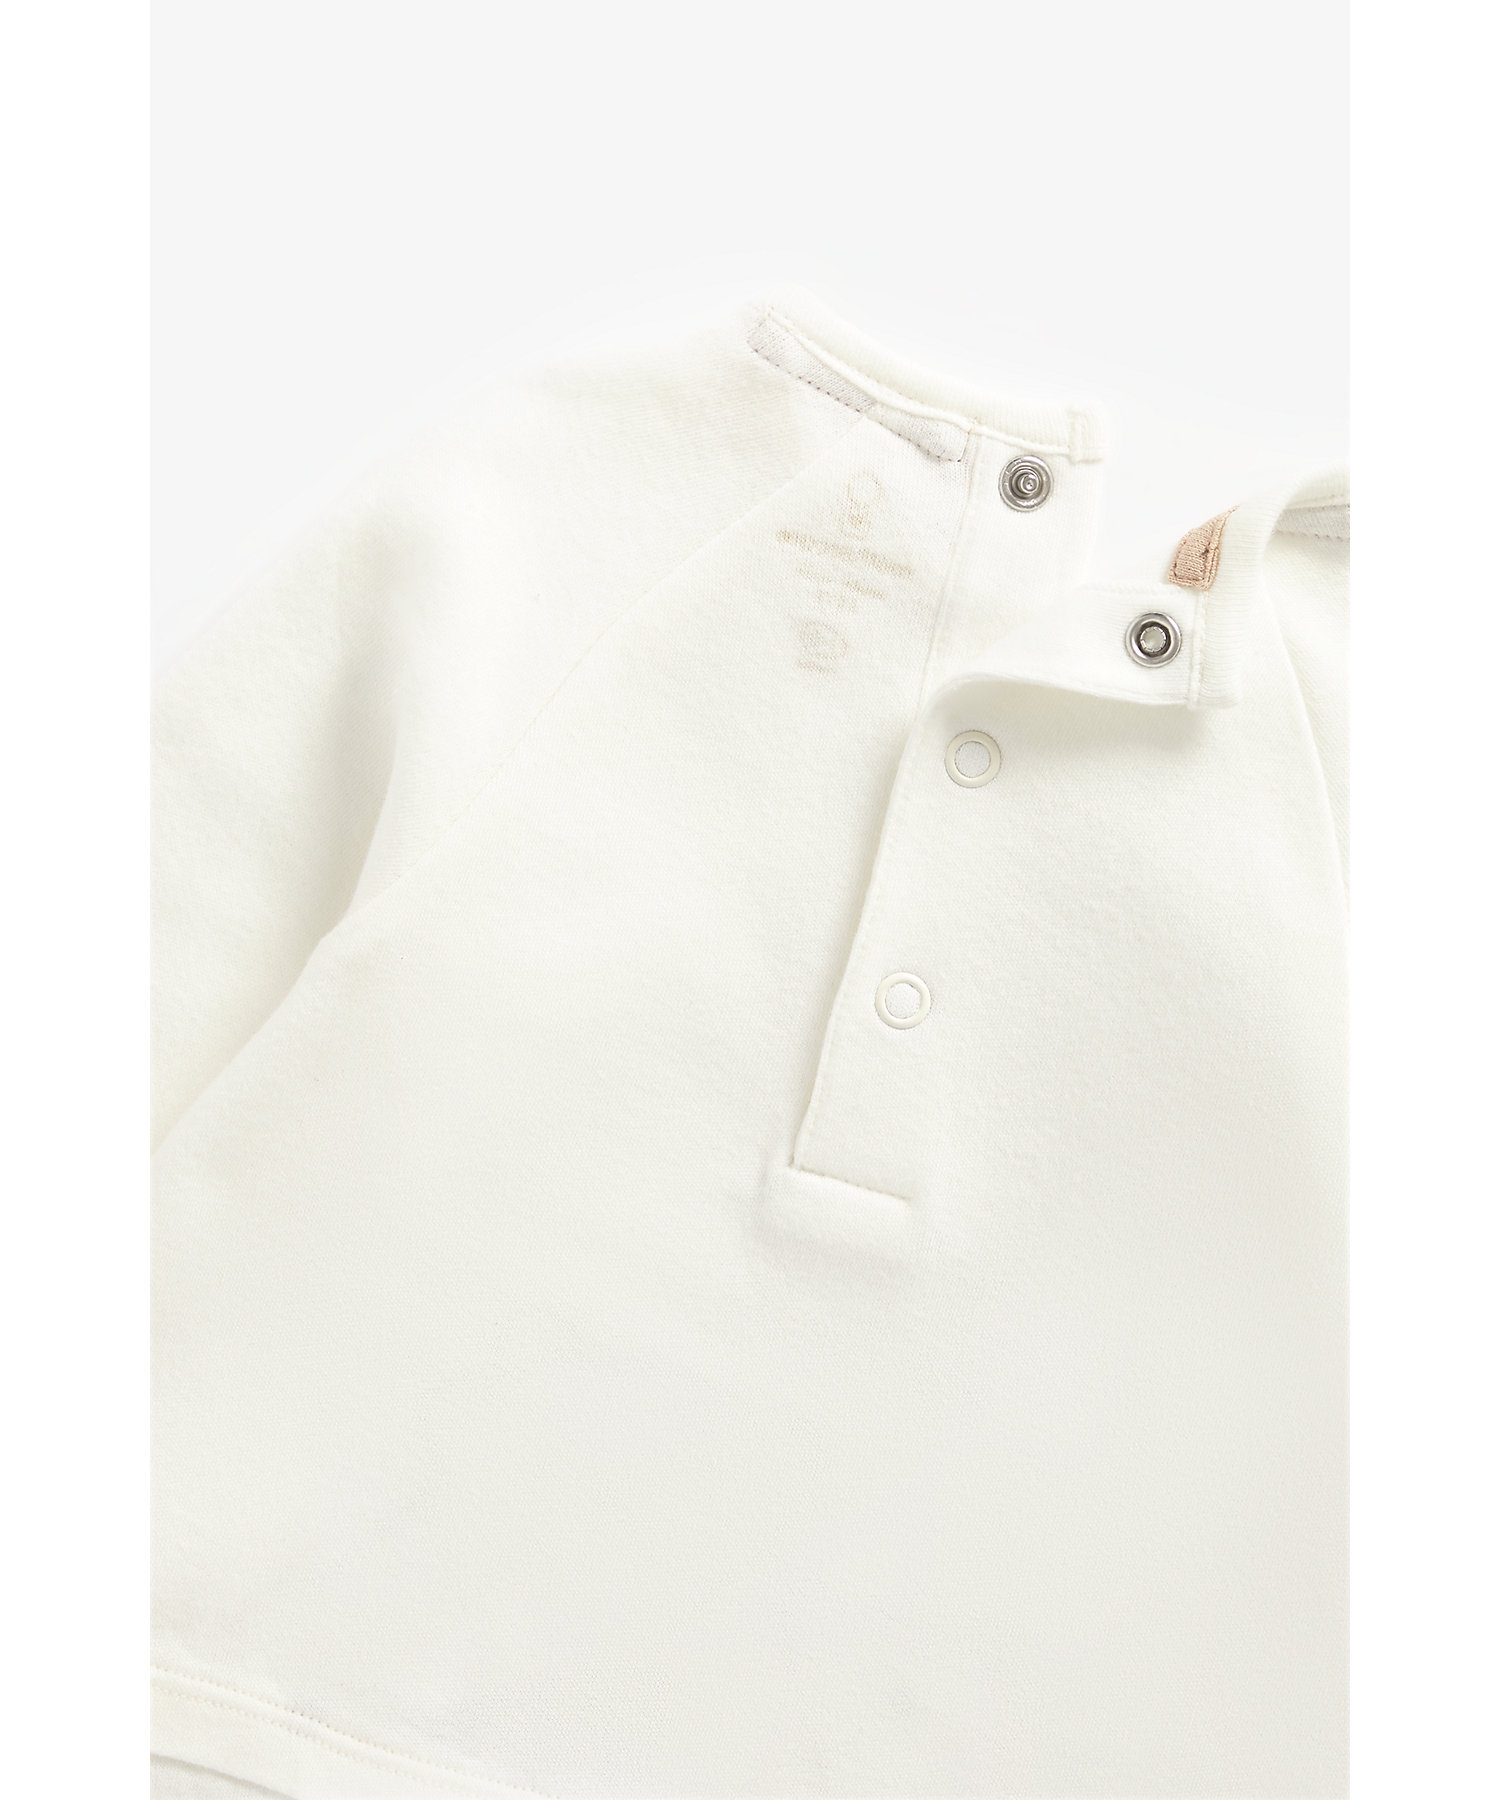 Unisex Full Sleeves Sleepsuits Mock Top and Bottom-White